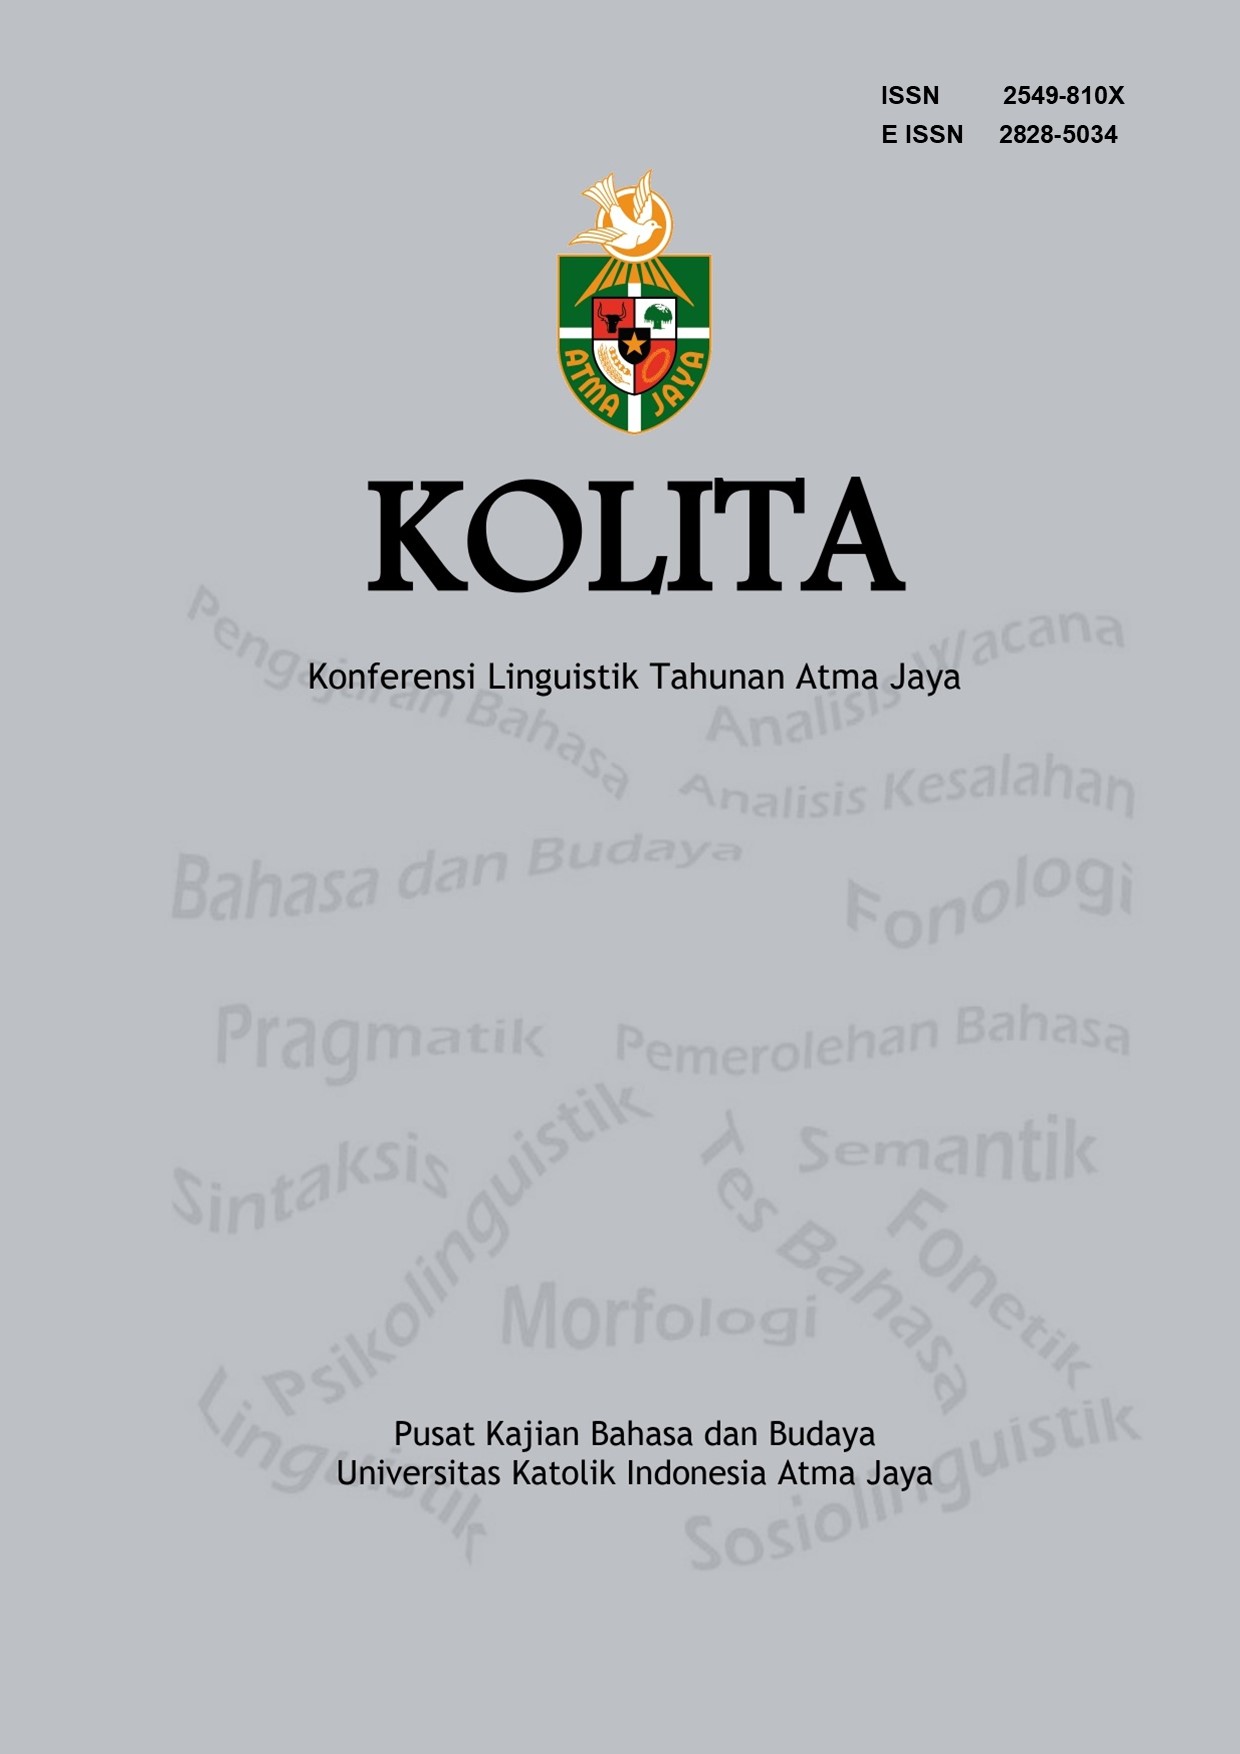 Prosiding Konferensi Linguistik Tahunan Atma Jaya (KOLITA)